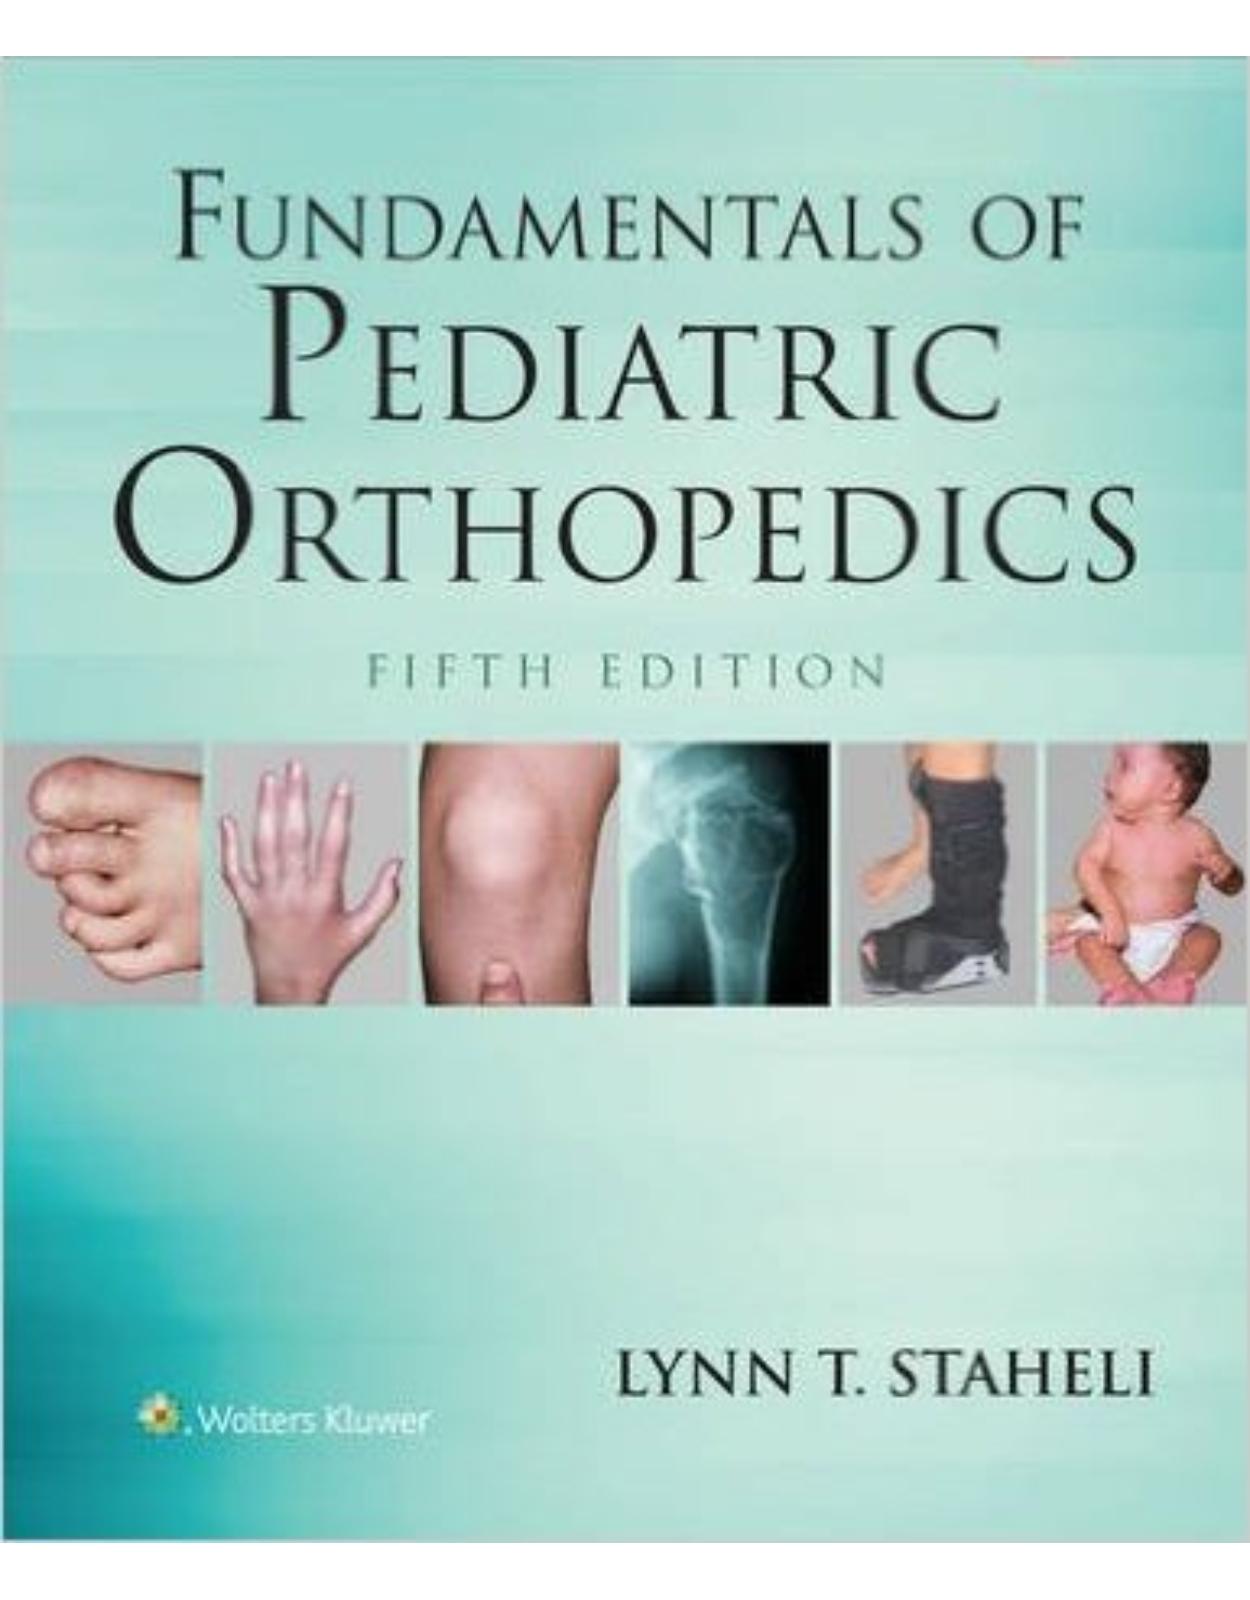 Fundamentals of Pediatric Orthopedics (Staheli, Fundamentals of Pediatric Orthopedics) Fifth Edition